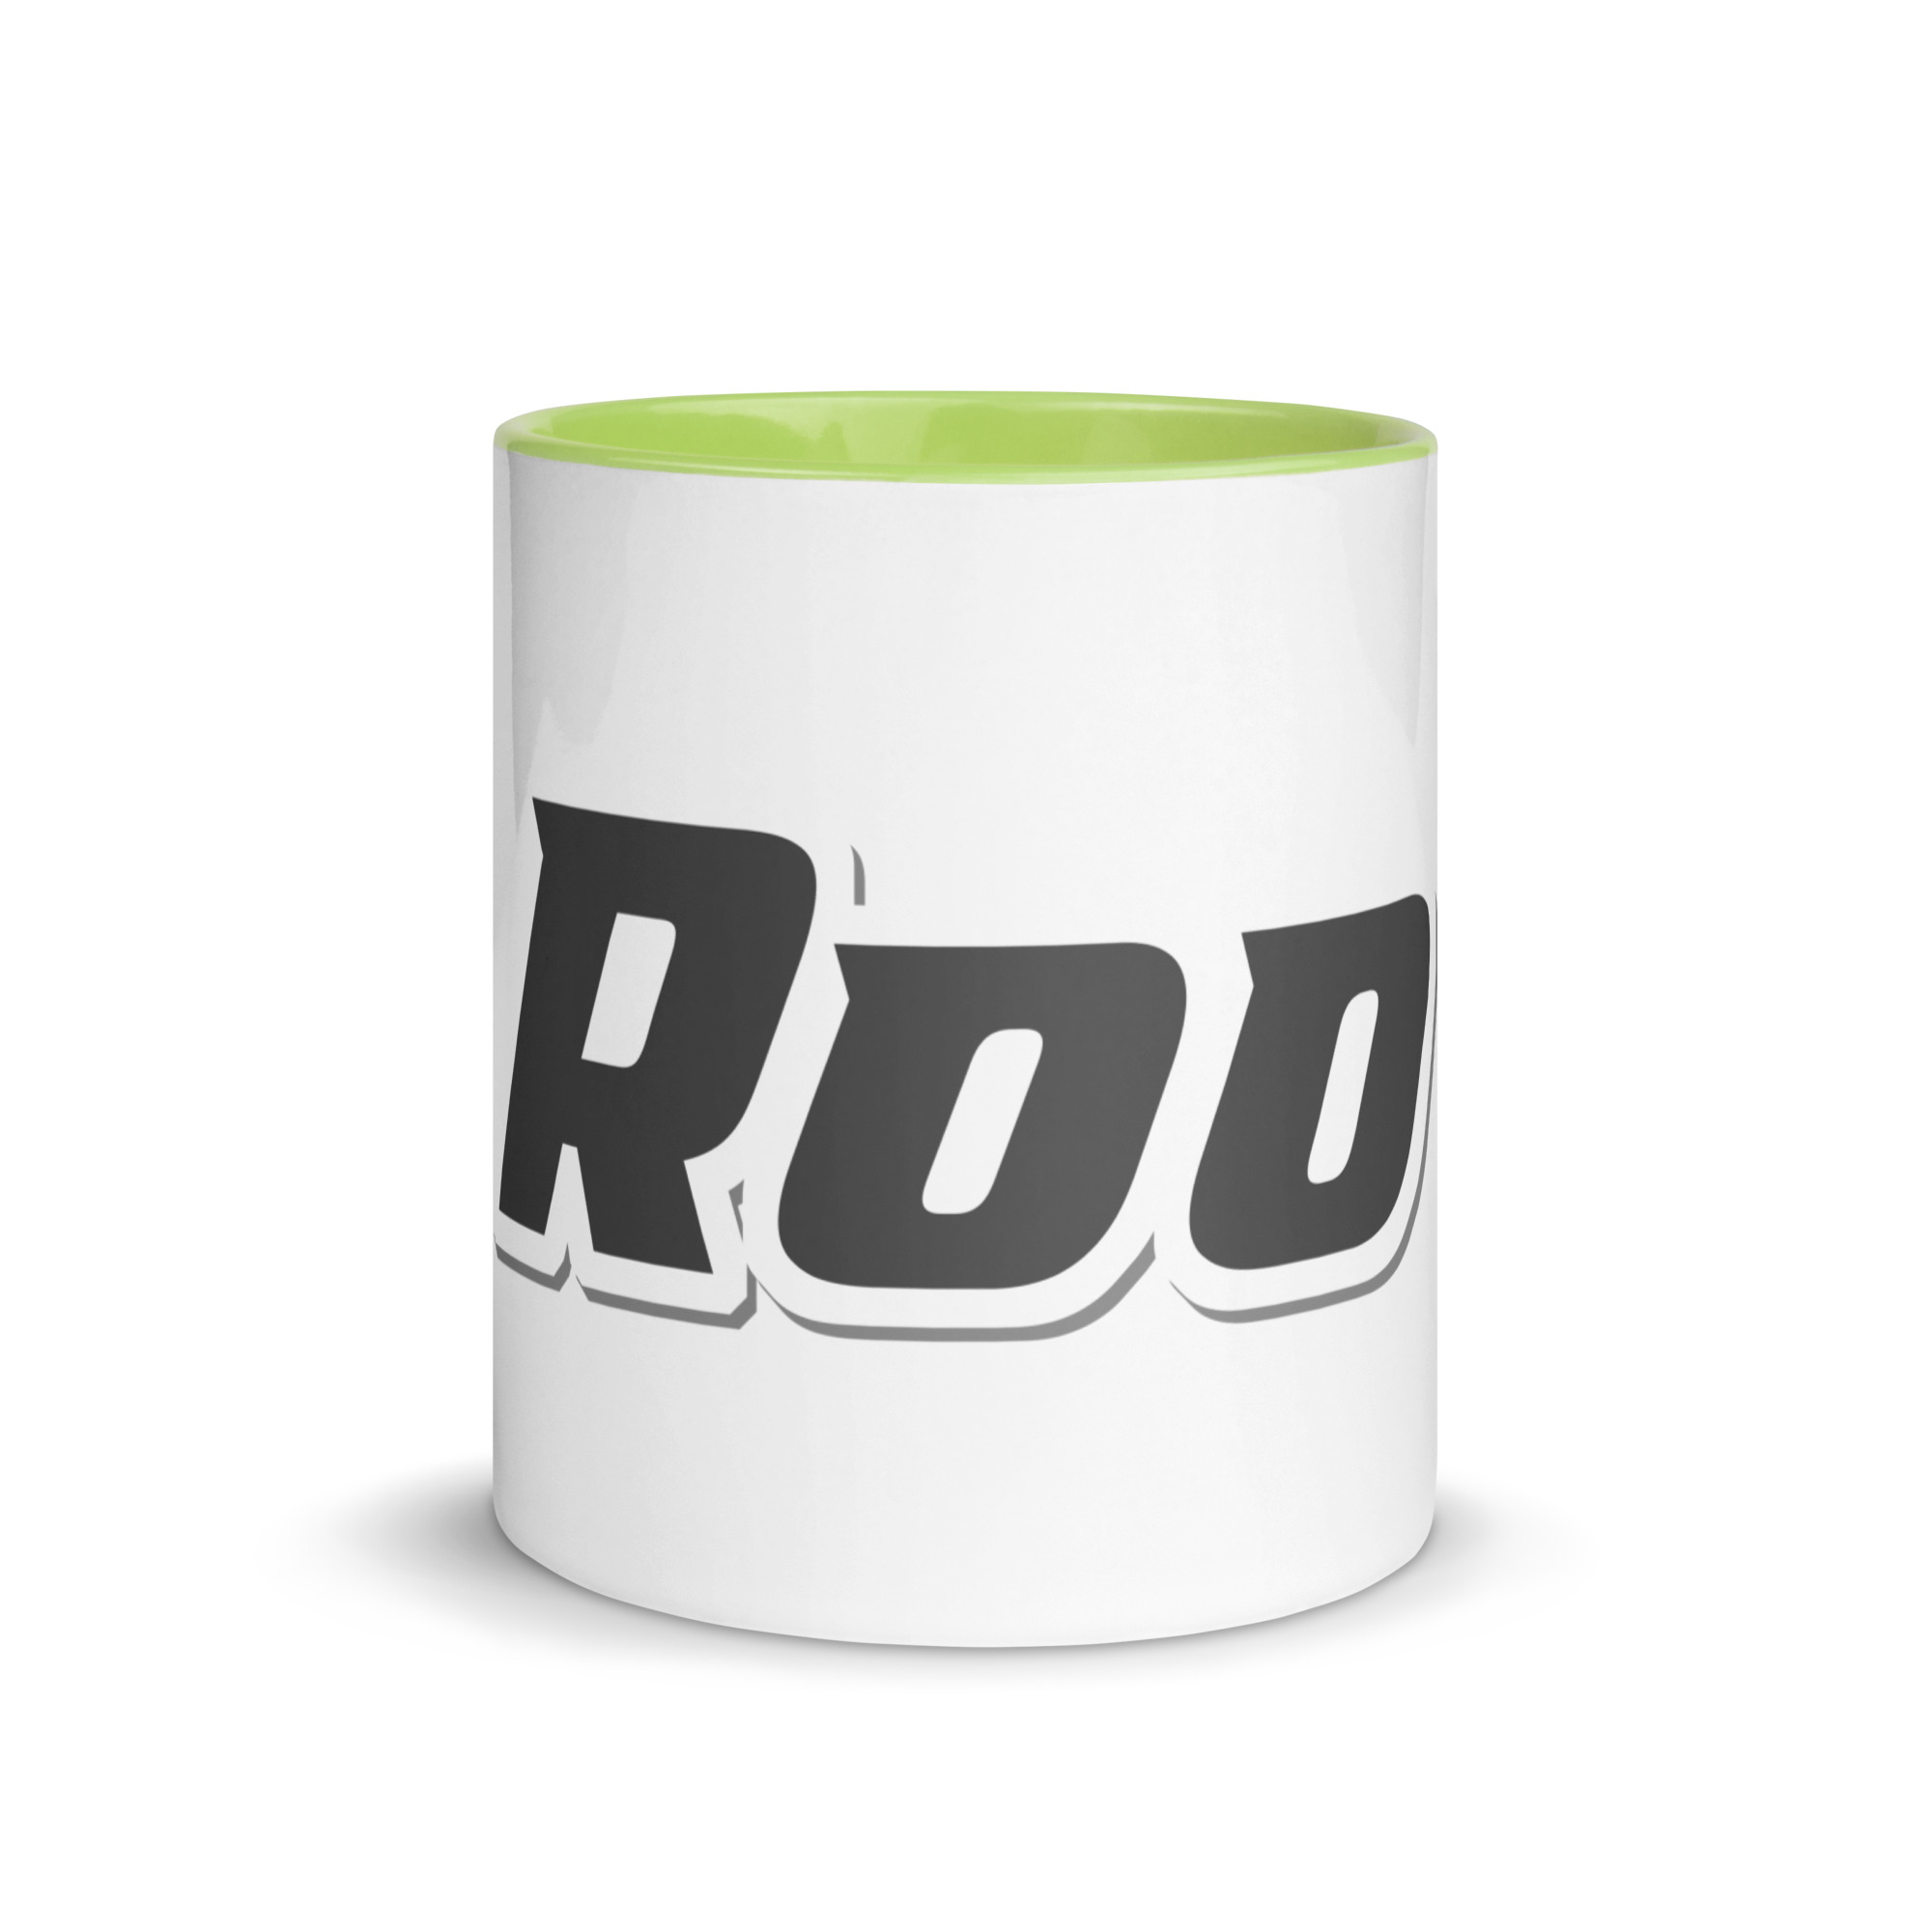 white-ceramic-mug-with-color-inside-green-11-oz-front-6525b5060946a.jpg